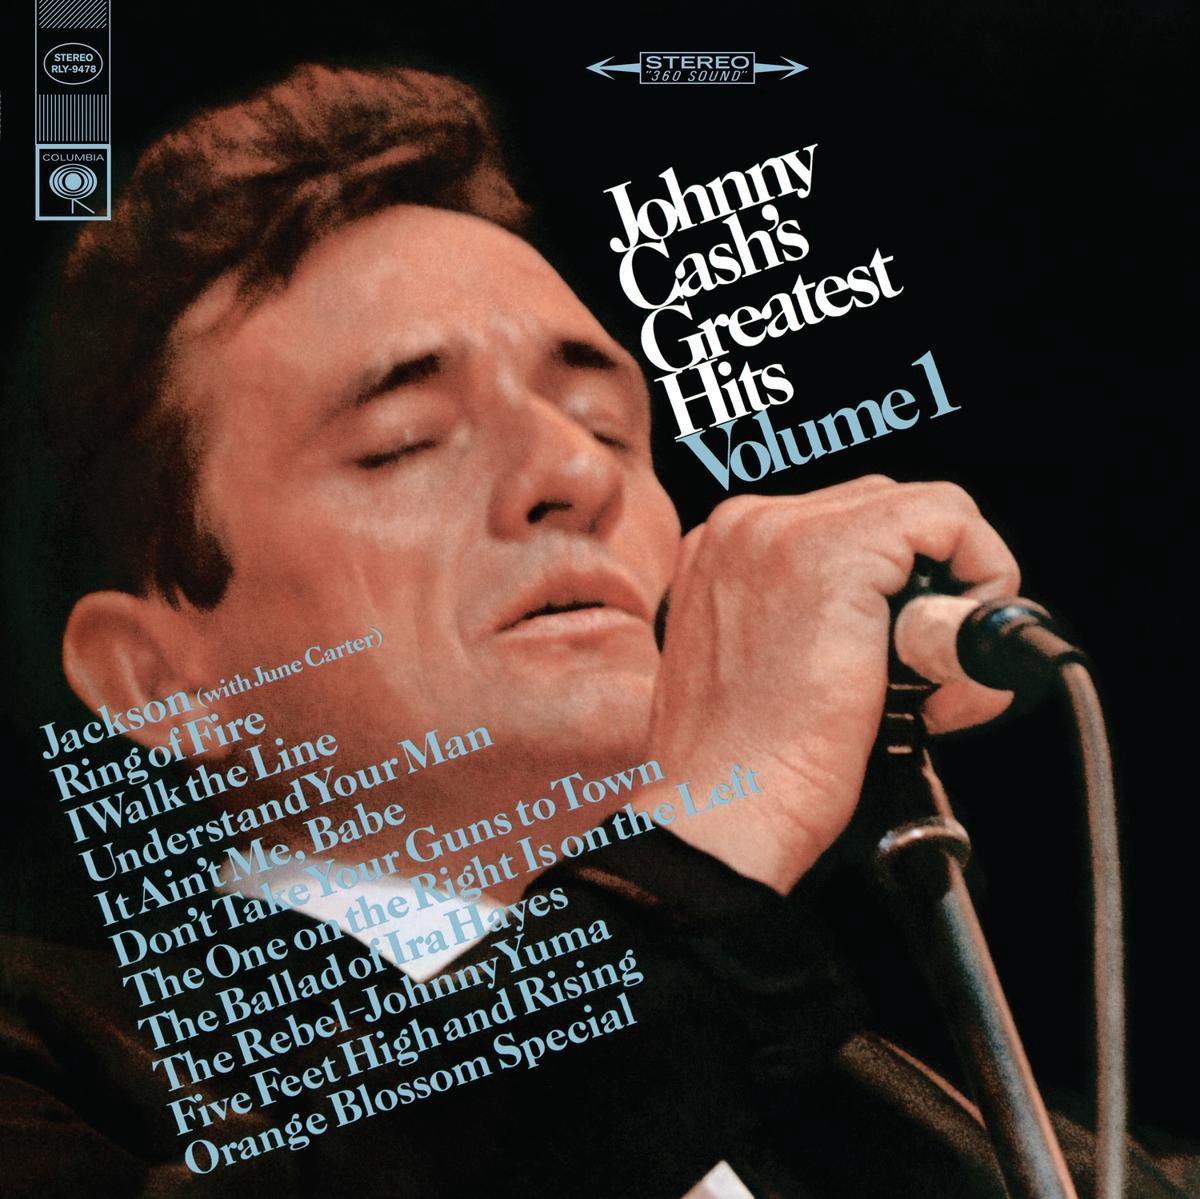 Johnny Cash - Greatest Hits, Volume 1